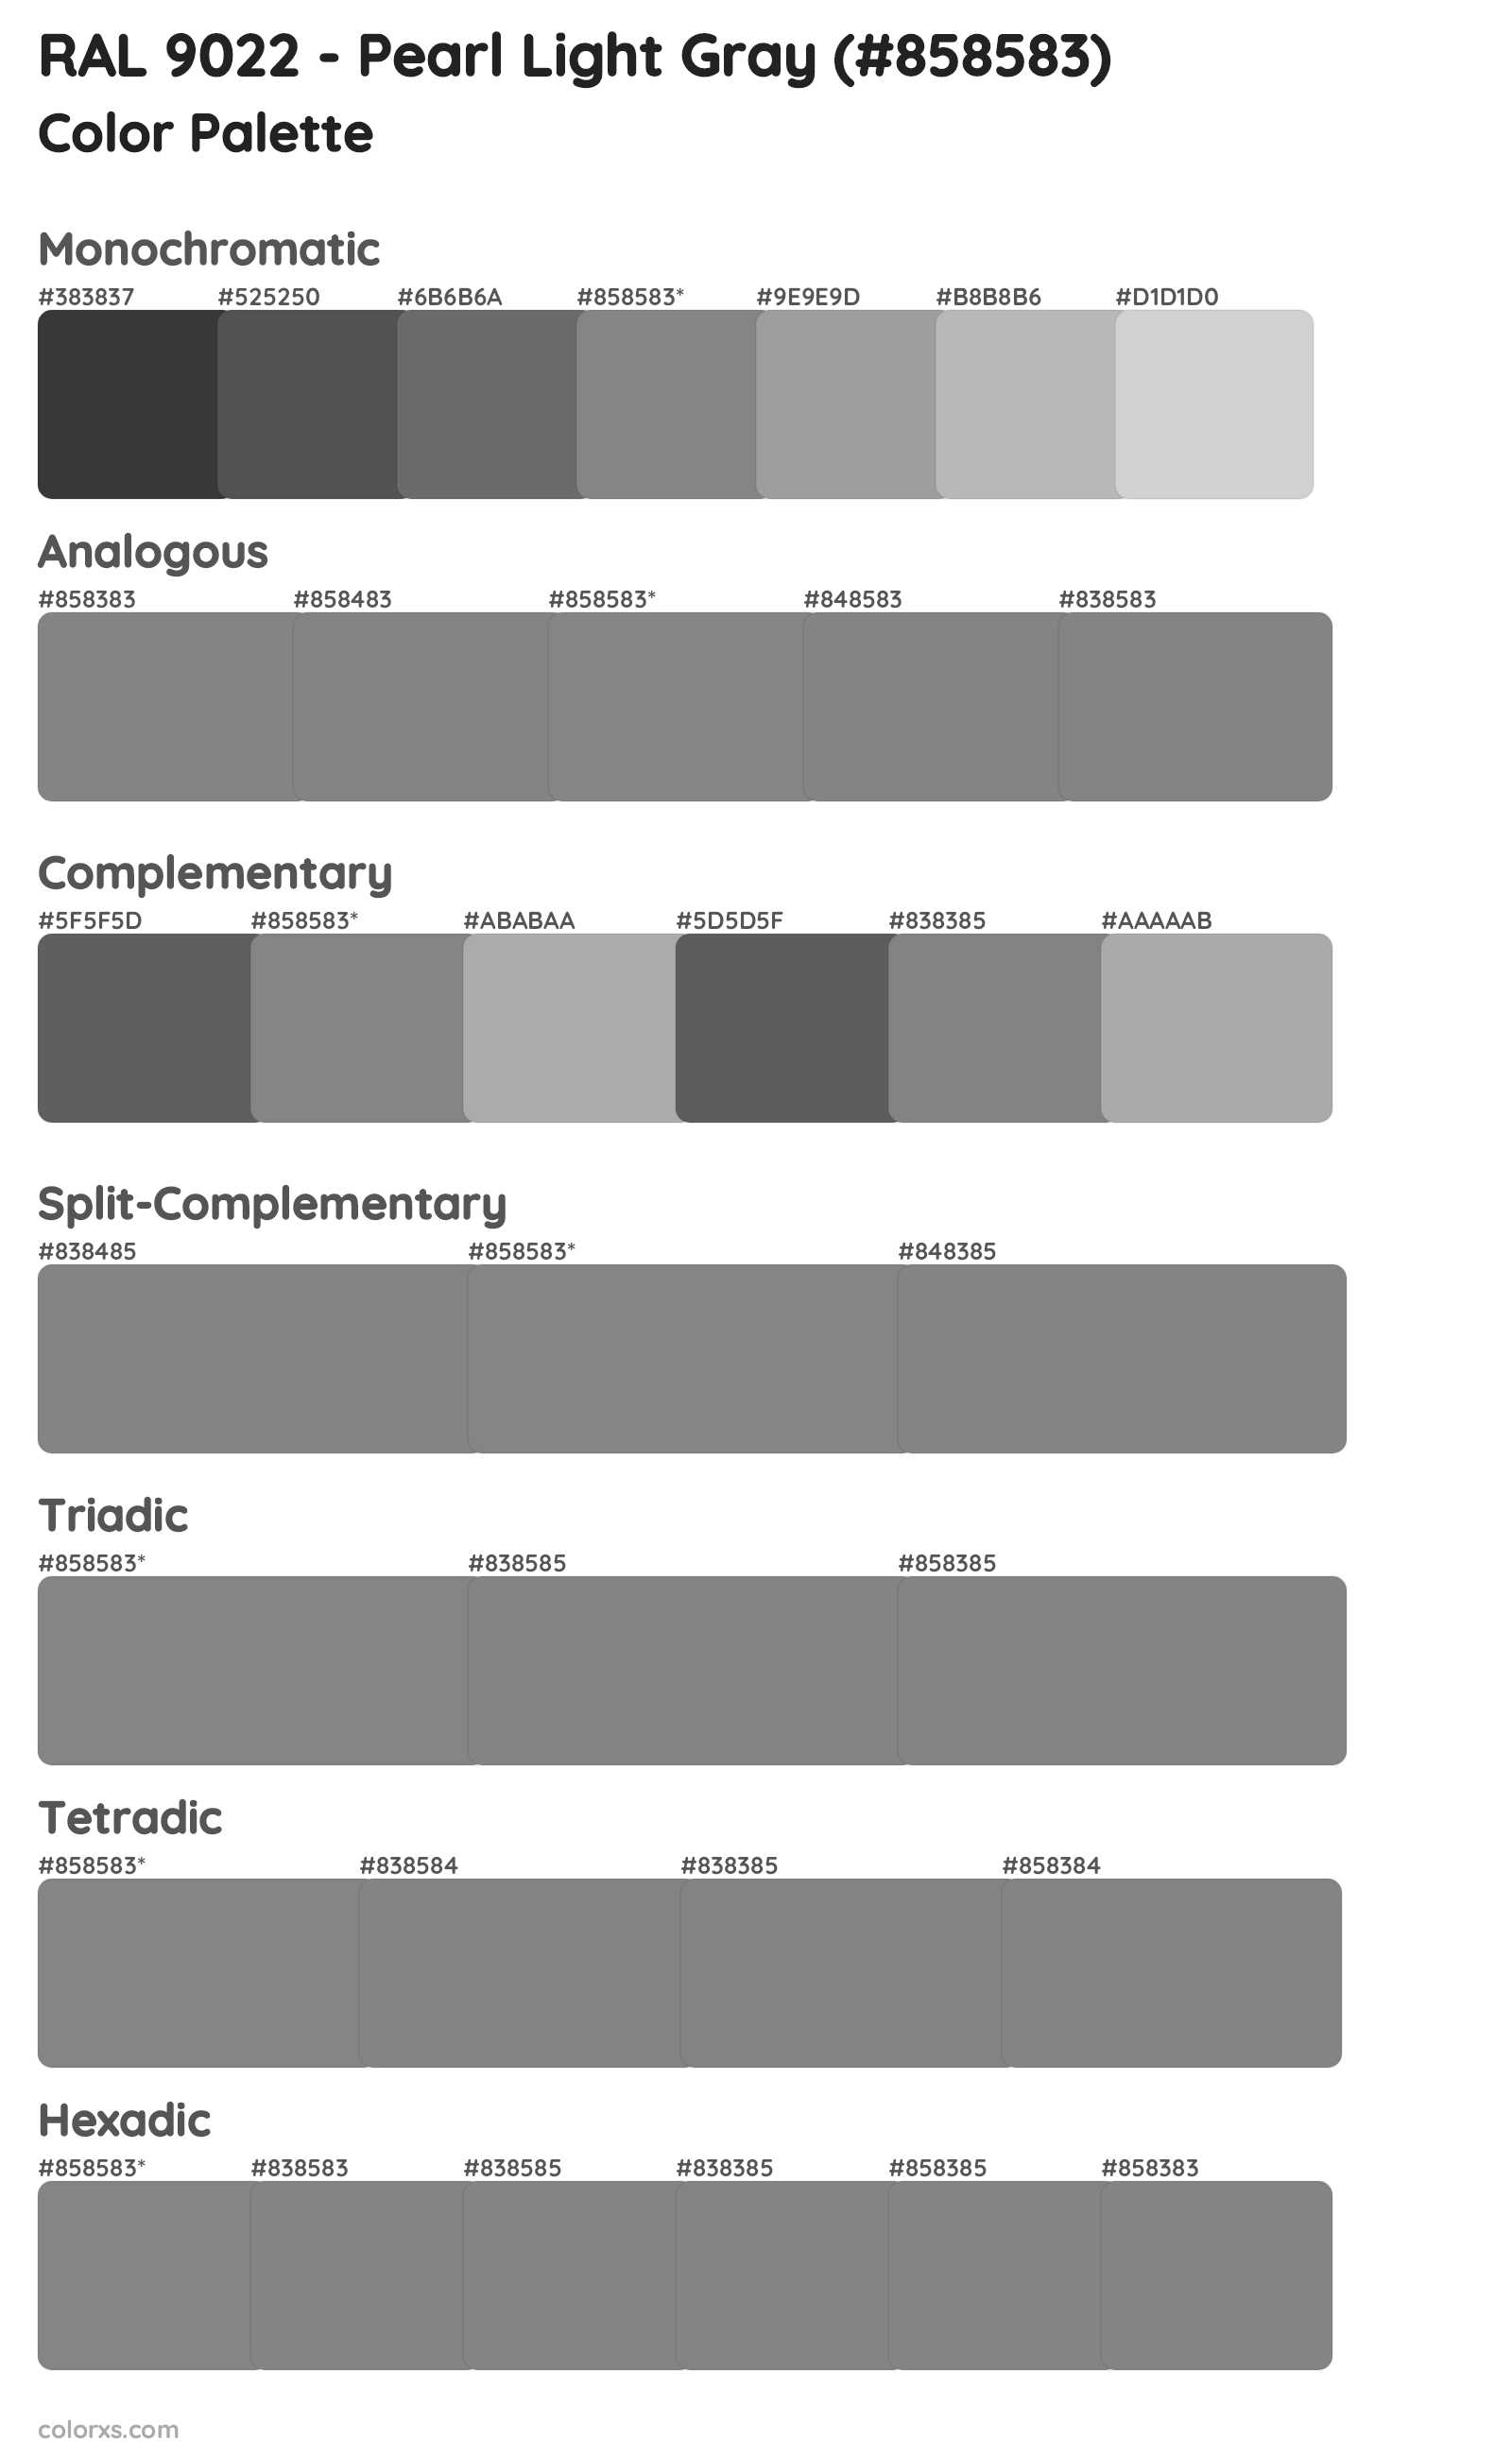 RAL 9022 - Pearl Light Gray Color Scheme Palettes